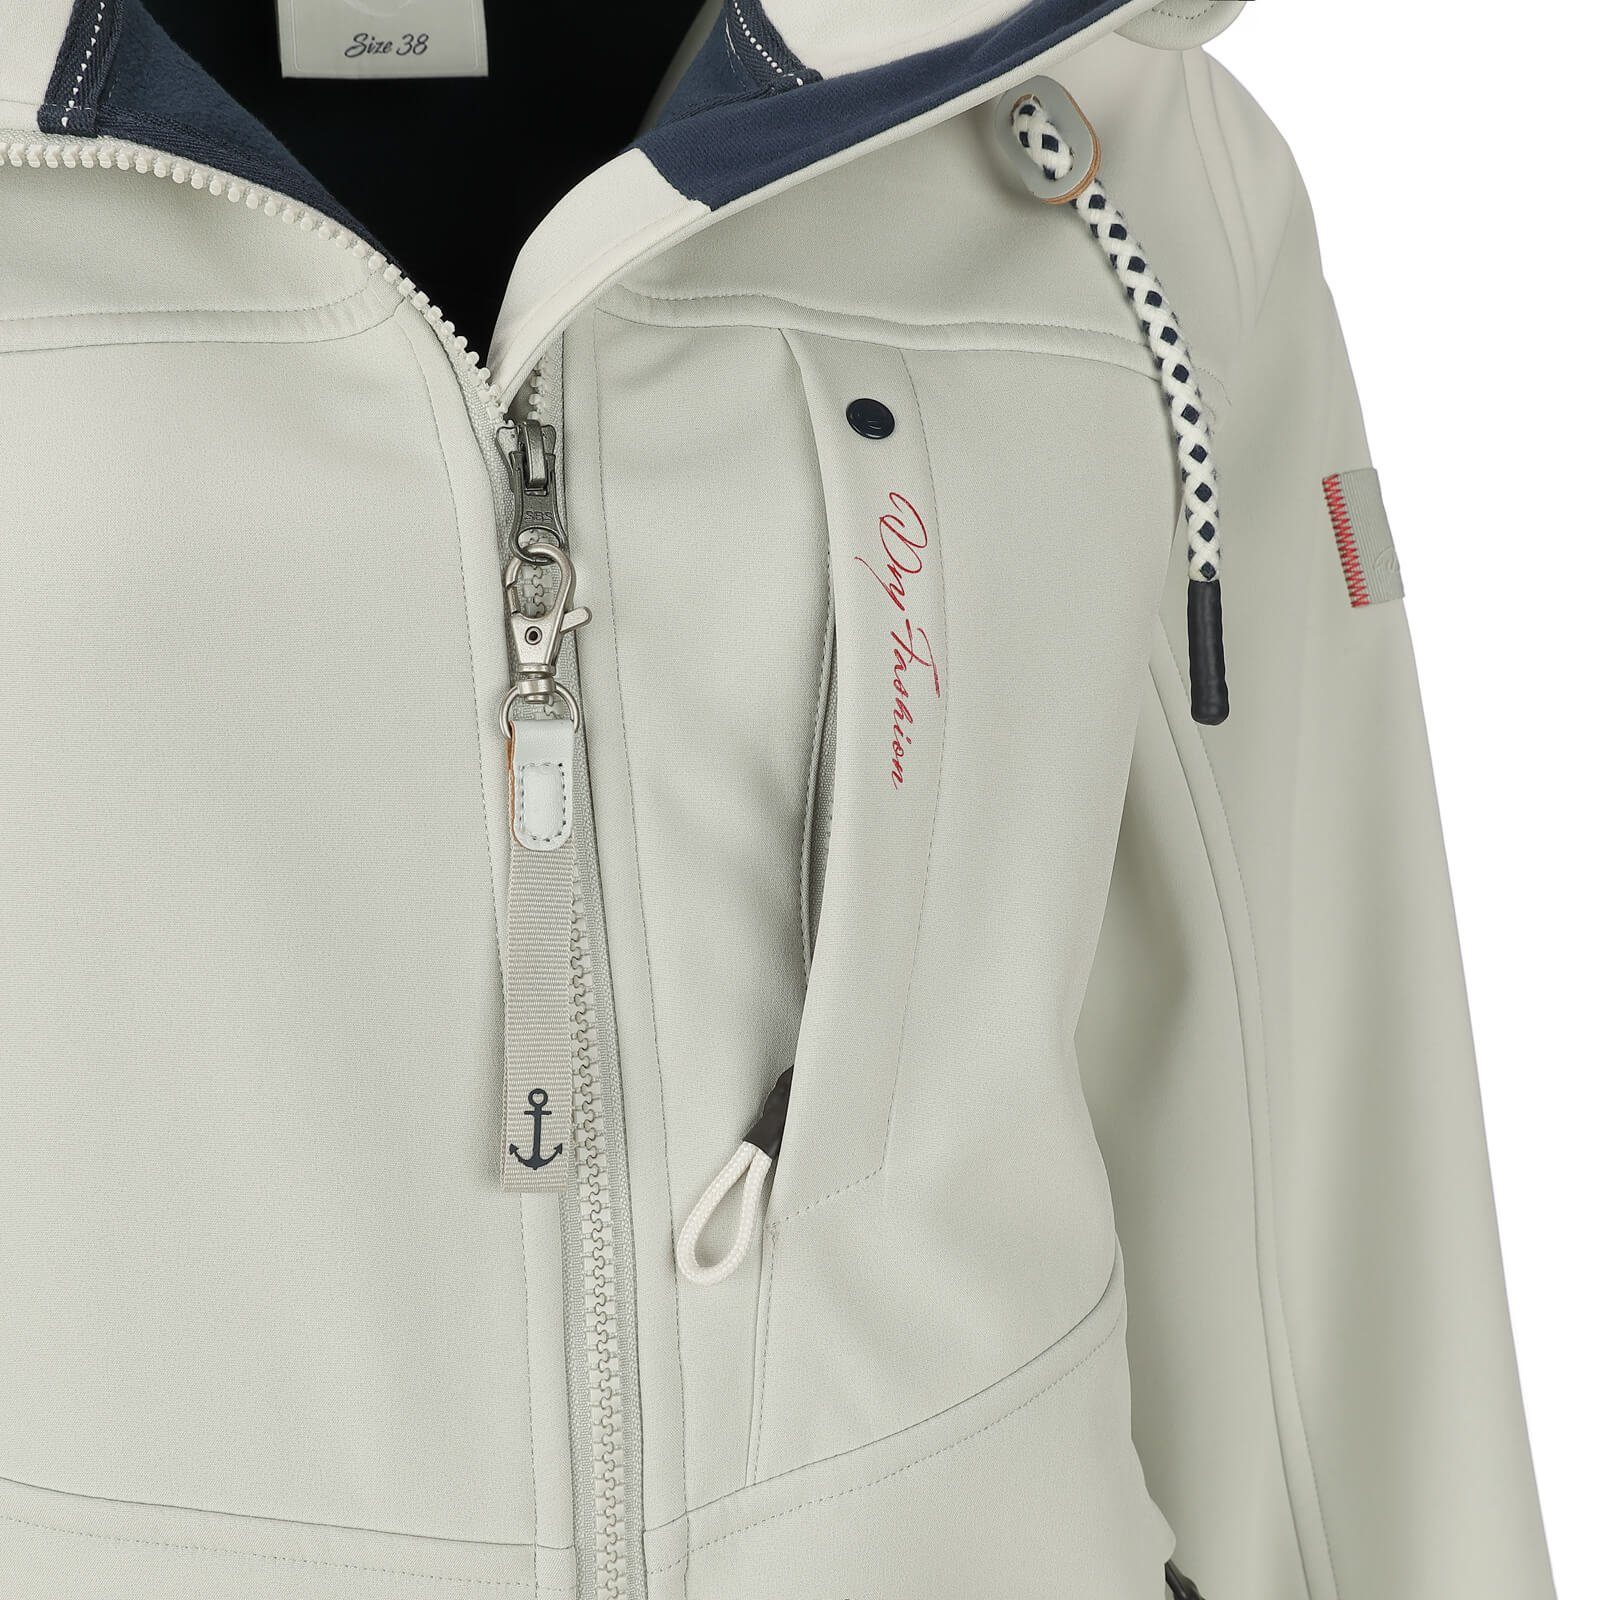 Dry Fashion Softshellmantel Rerik - Softshell Damen Mantel Outdoor-Jacke cremeweiß Softshelljacke